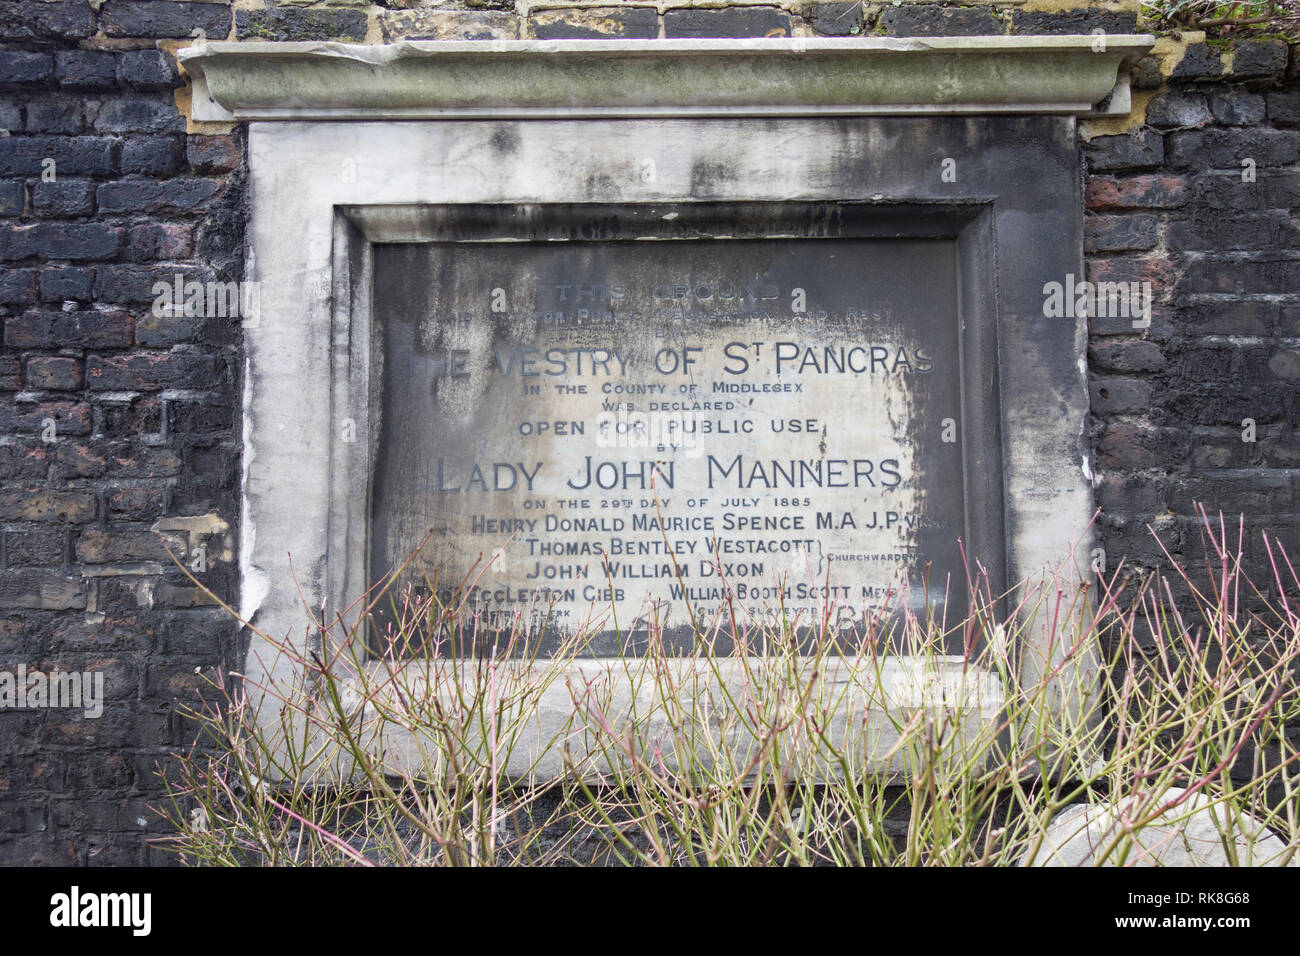 St Martin's Gardens - Vestry of St Pancras churchyard - the former Camden Town Cemetery, Camden, London, UK Stock Photo